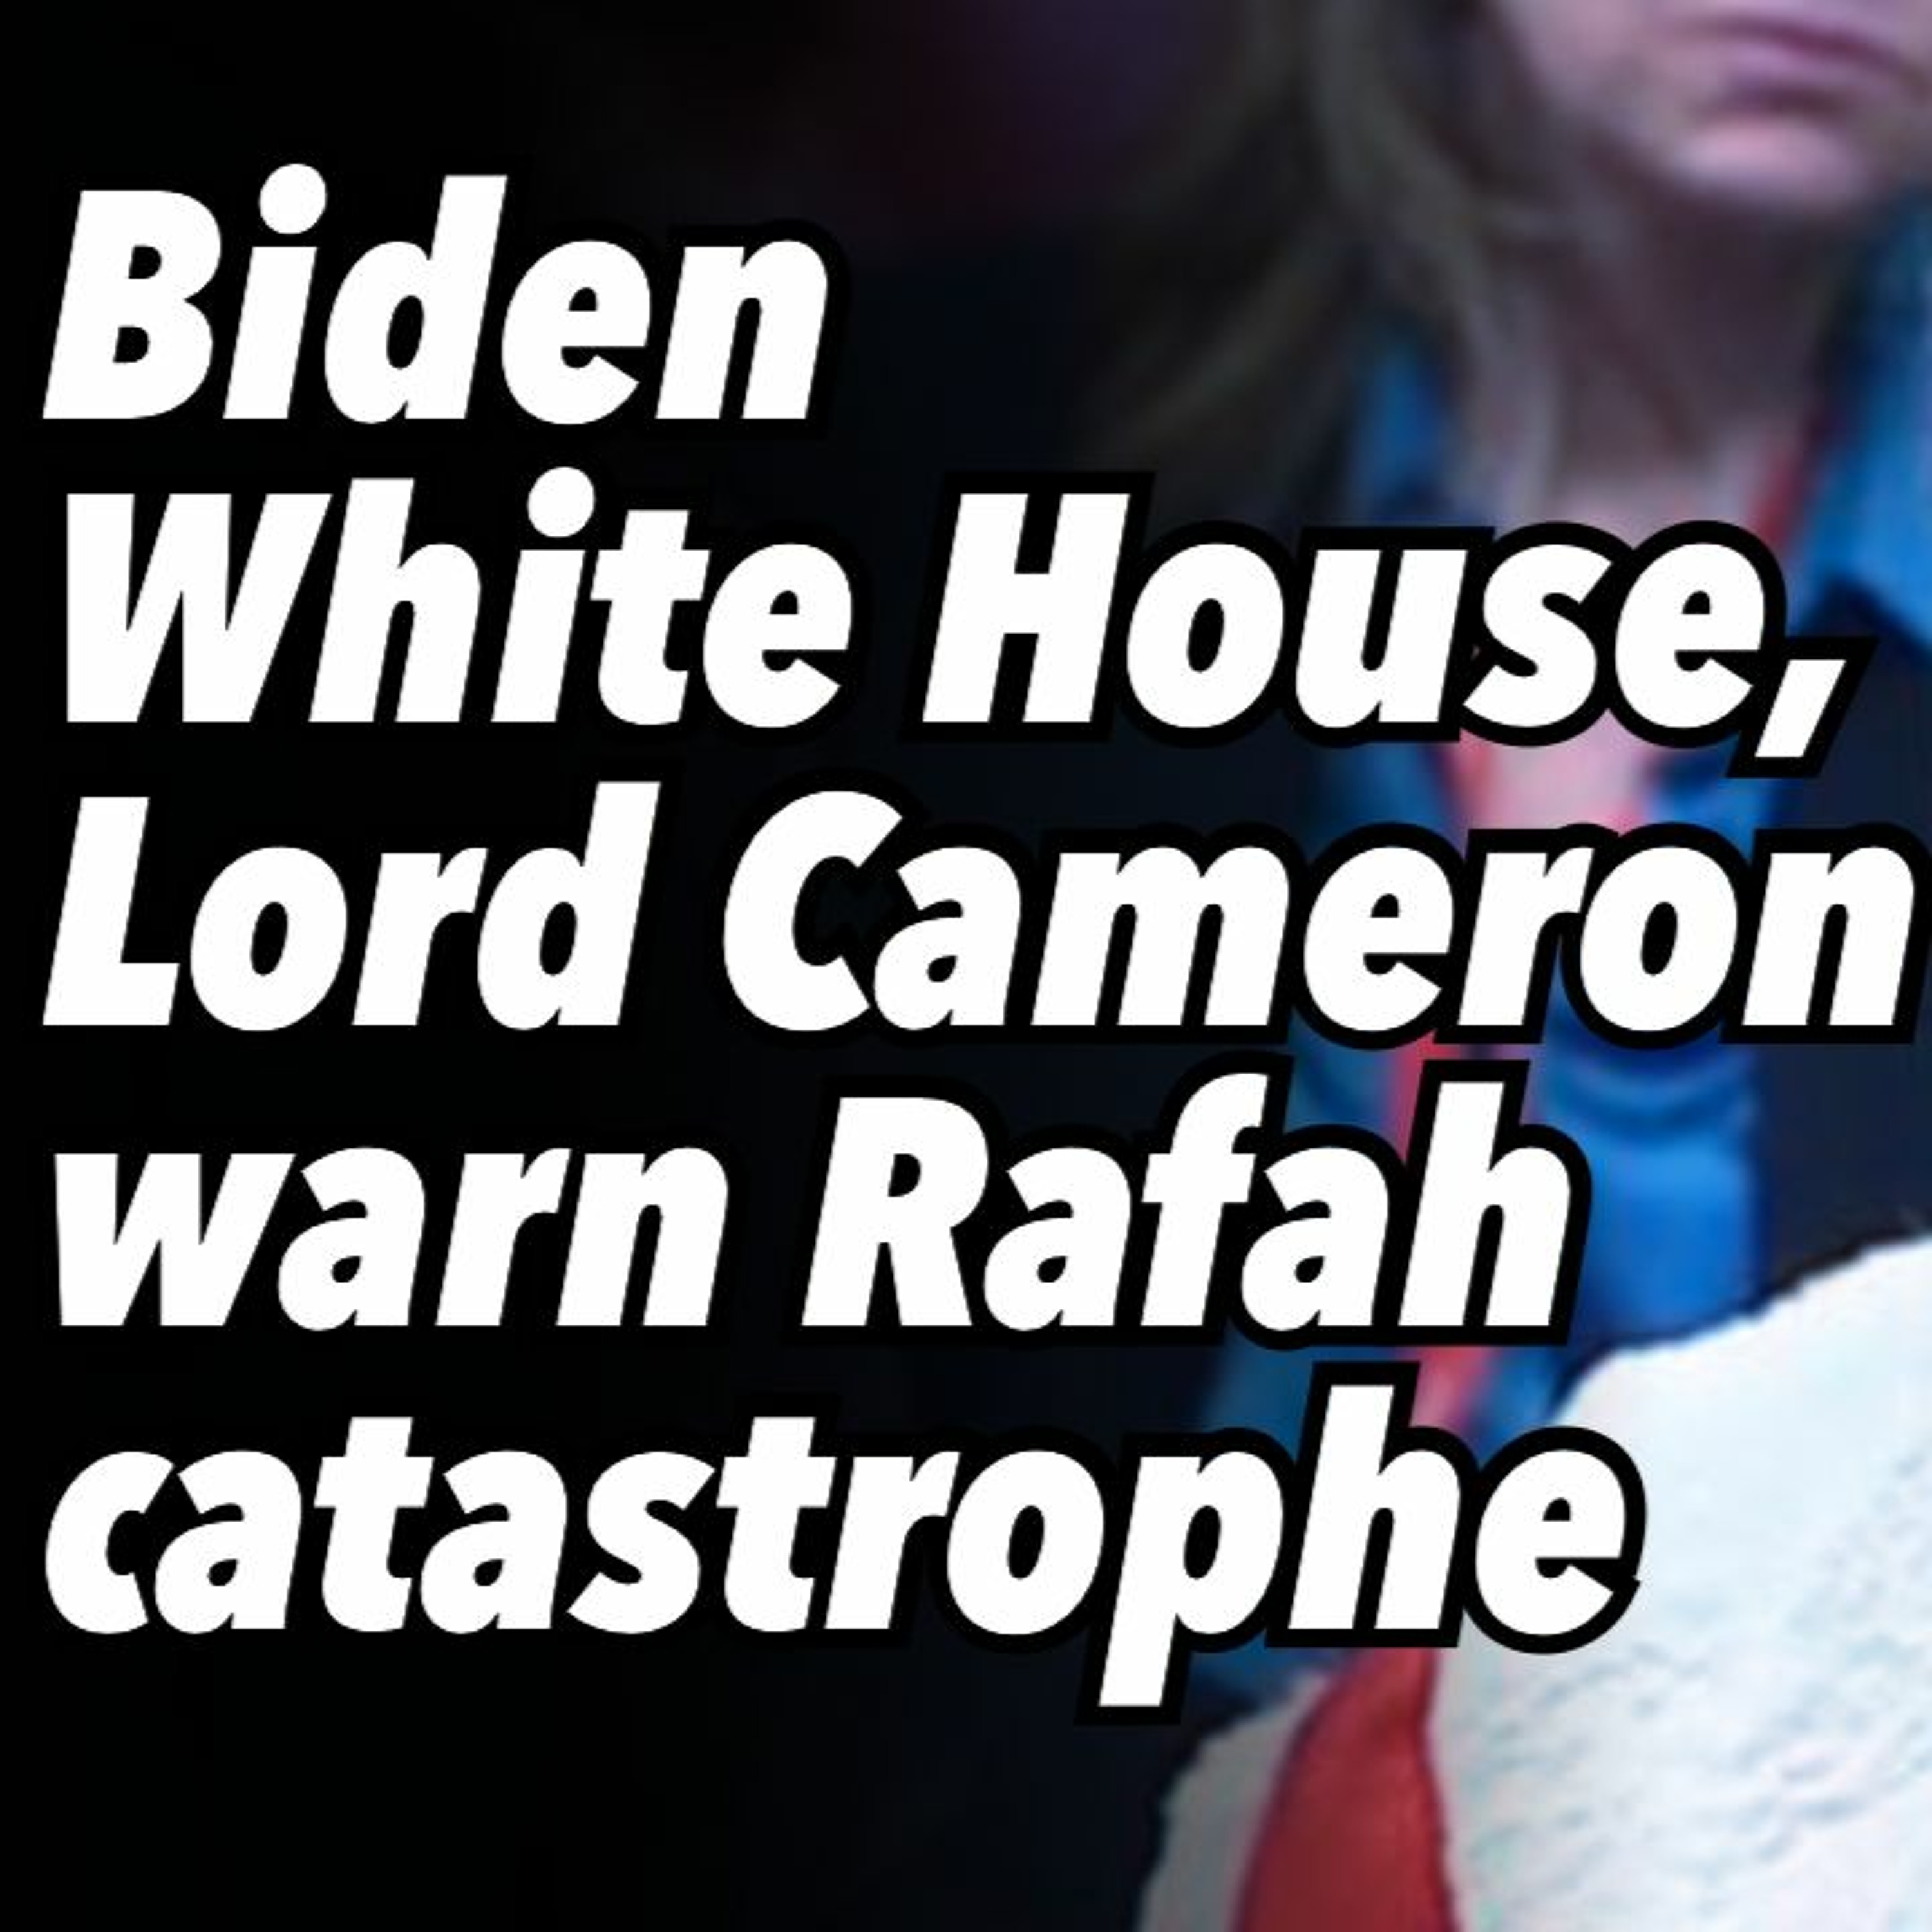 Biden White House, Lord Cameron warn Rafah catastrophe